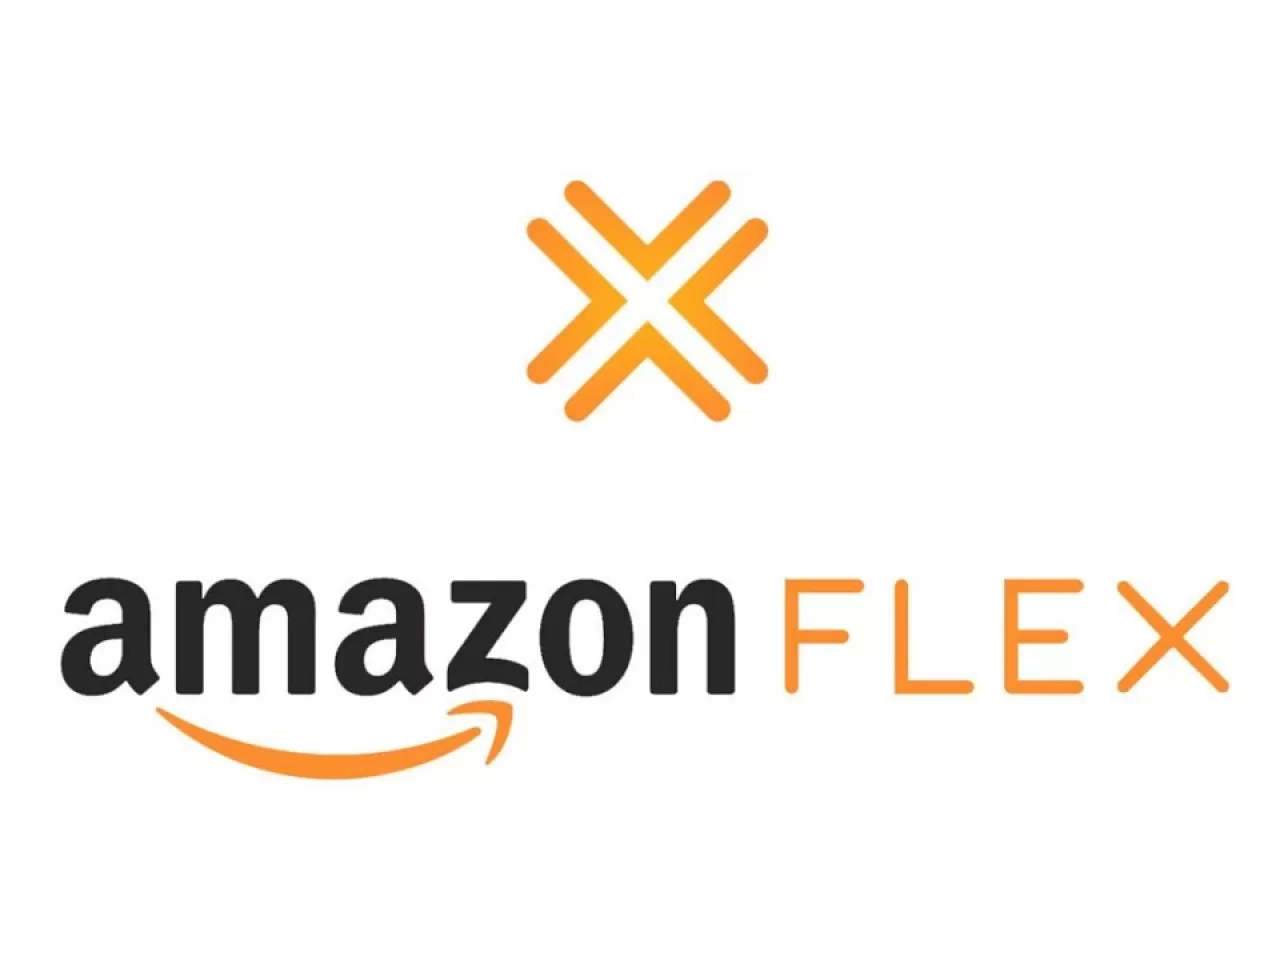 Amazon flex orlando